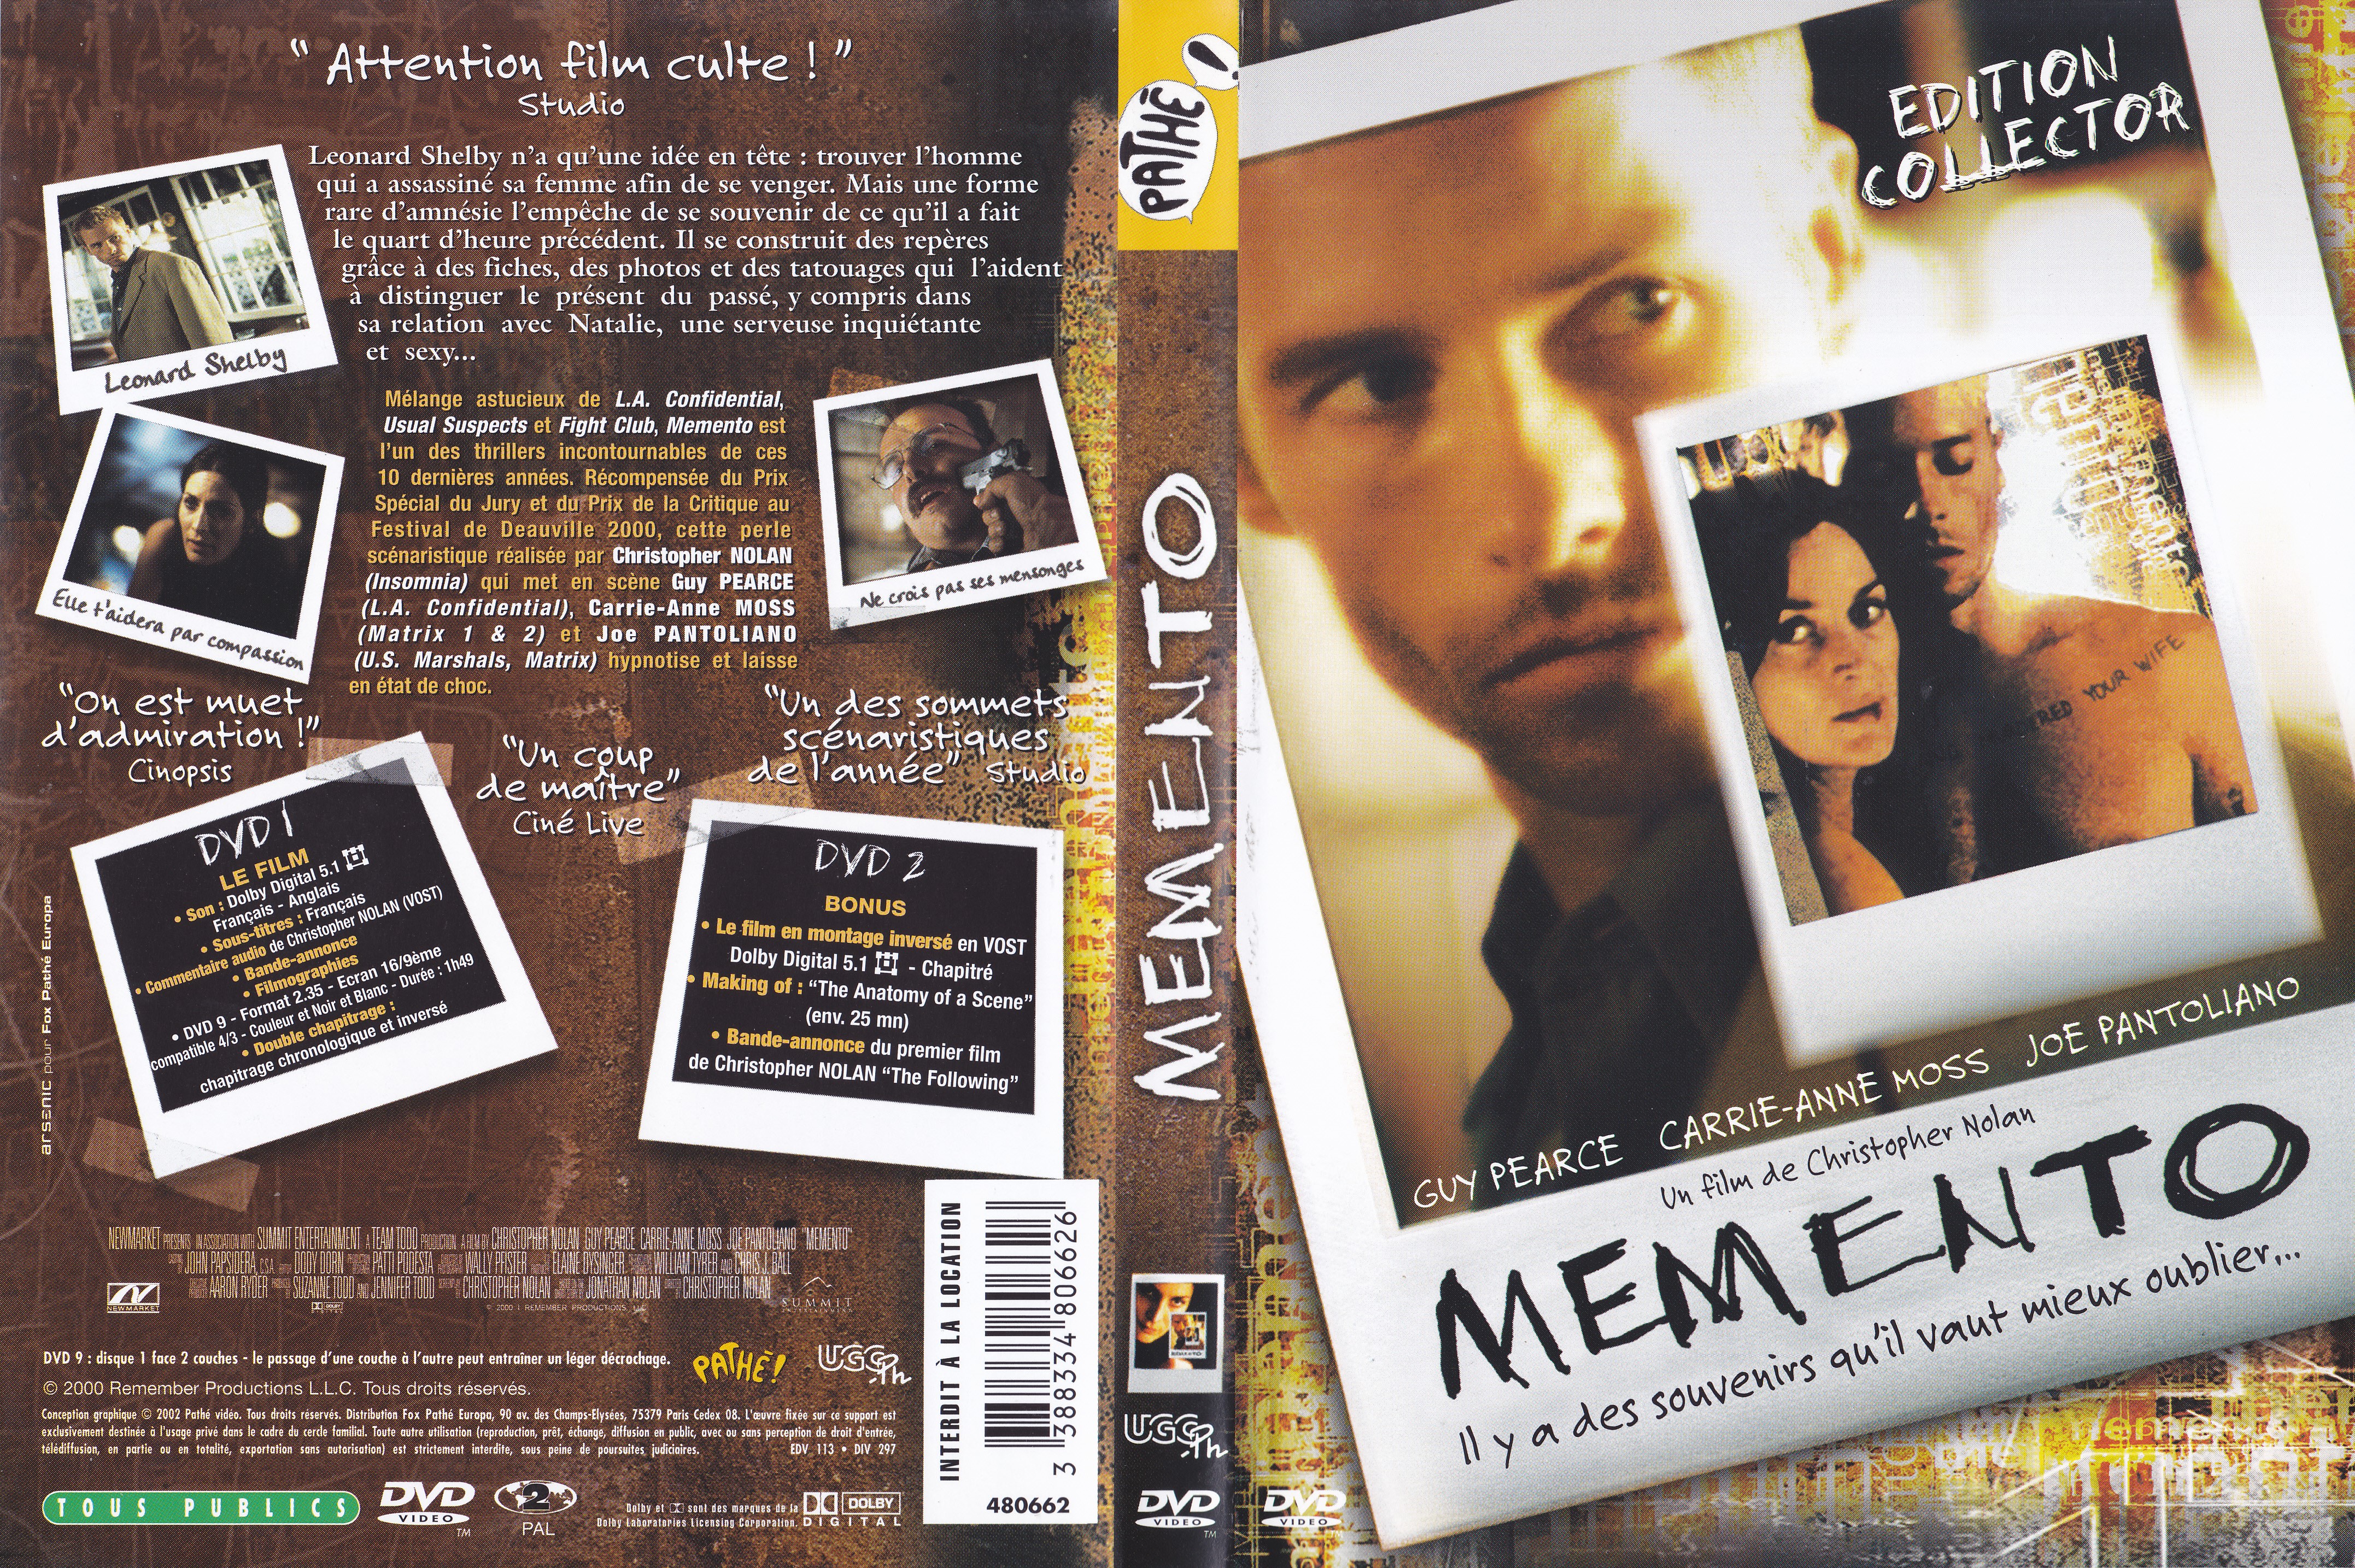 Jaquette DVD Memento v2